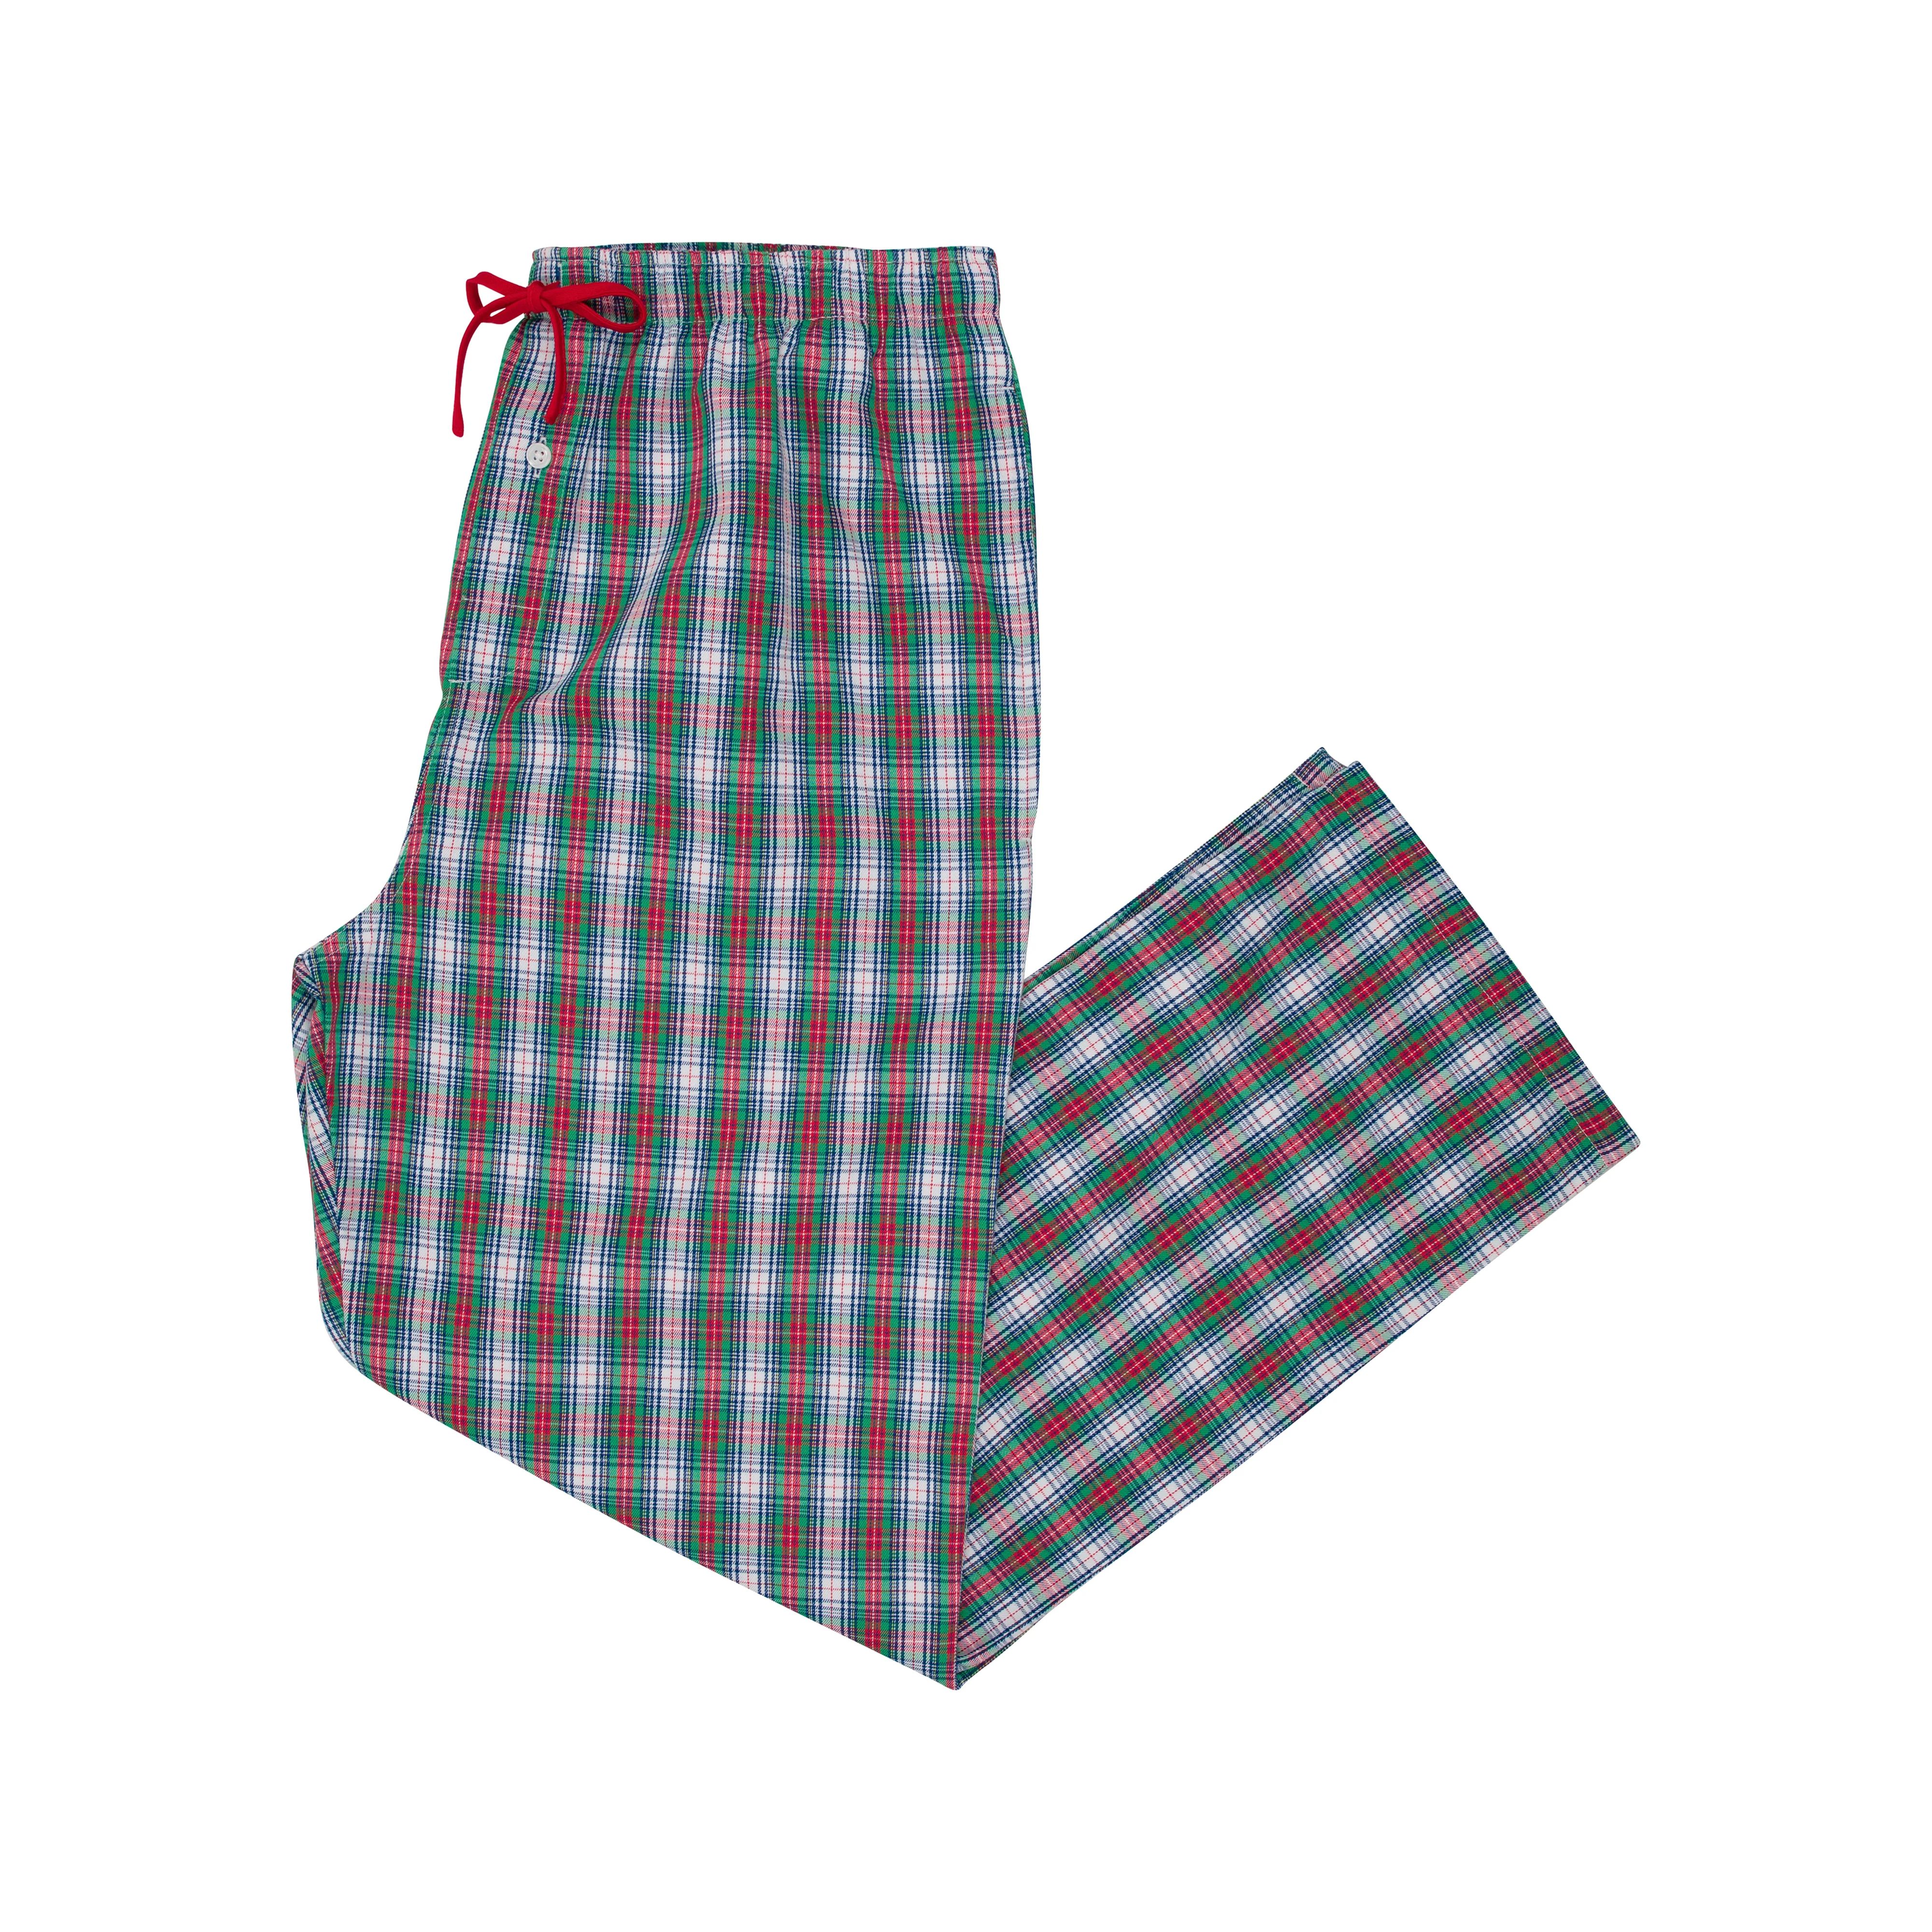 Sunday Style Sweatpants (Men's) - Prestonwood Plaid with Richmond Red | The Beaufort Bonnet Company